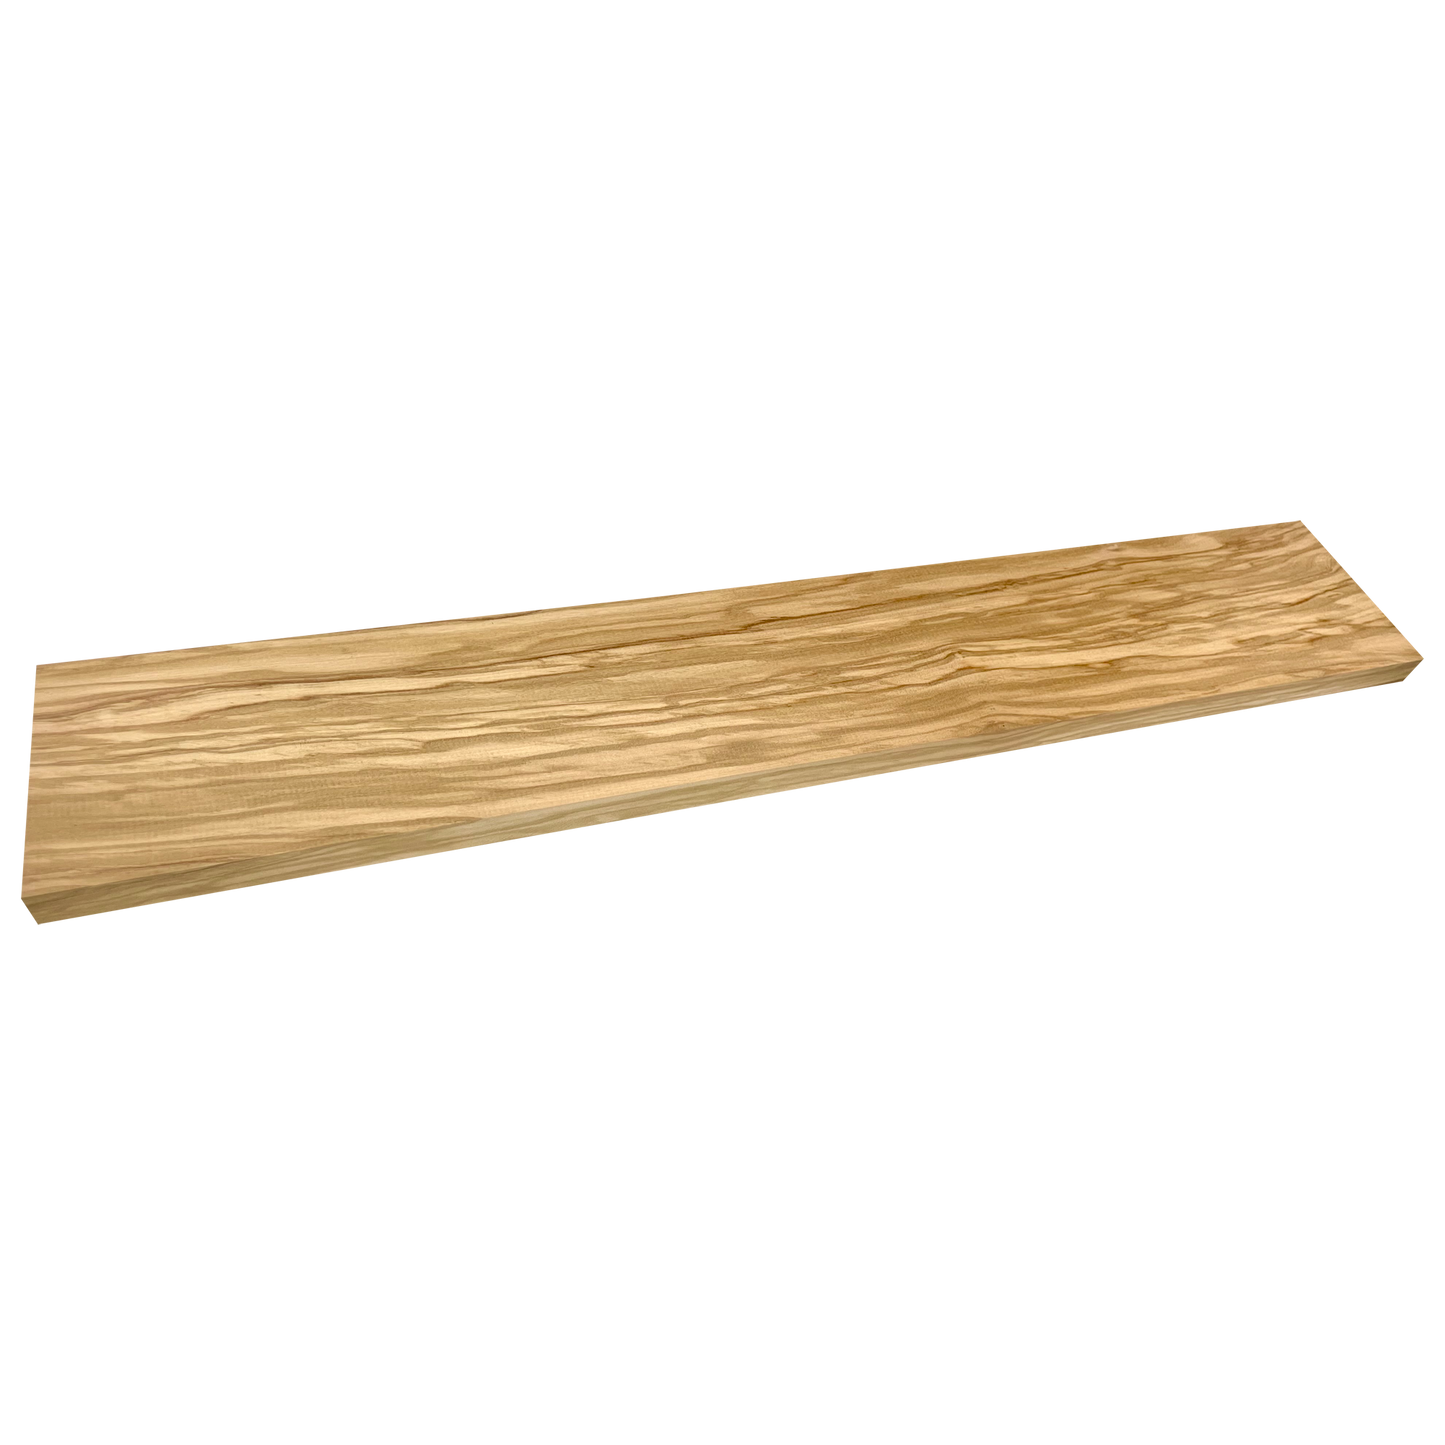 Olivewood - Dimensional Lumber